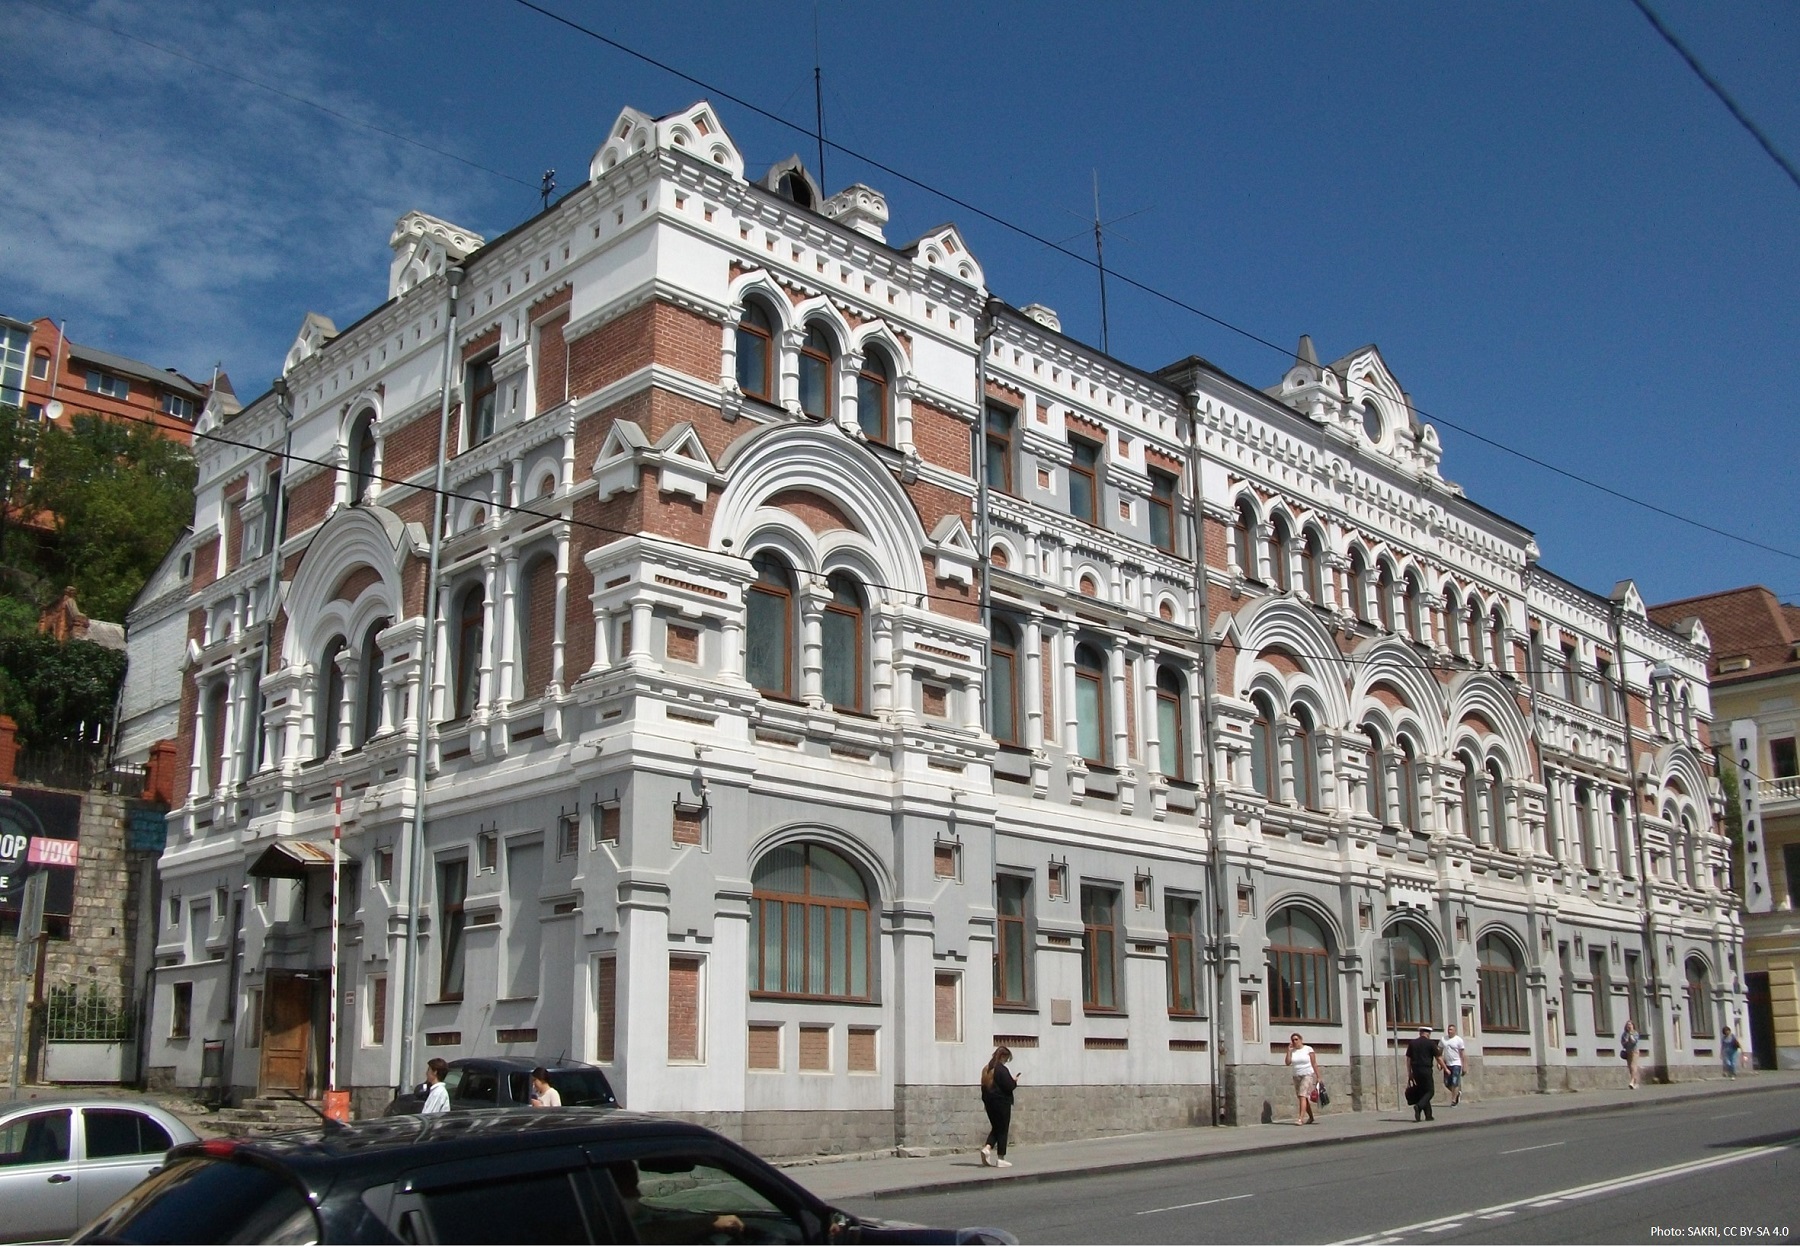 Vladivostok Post and Telegraph Office